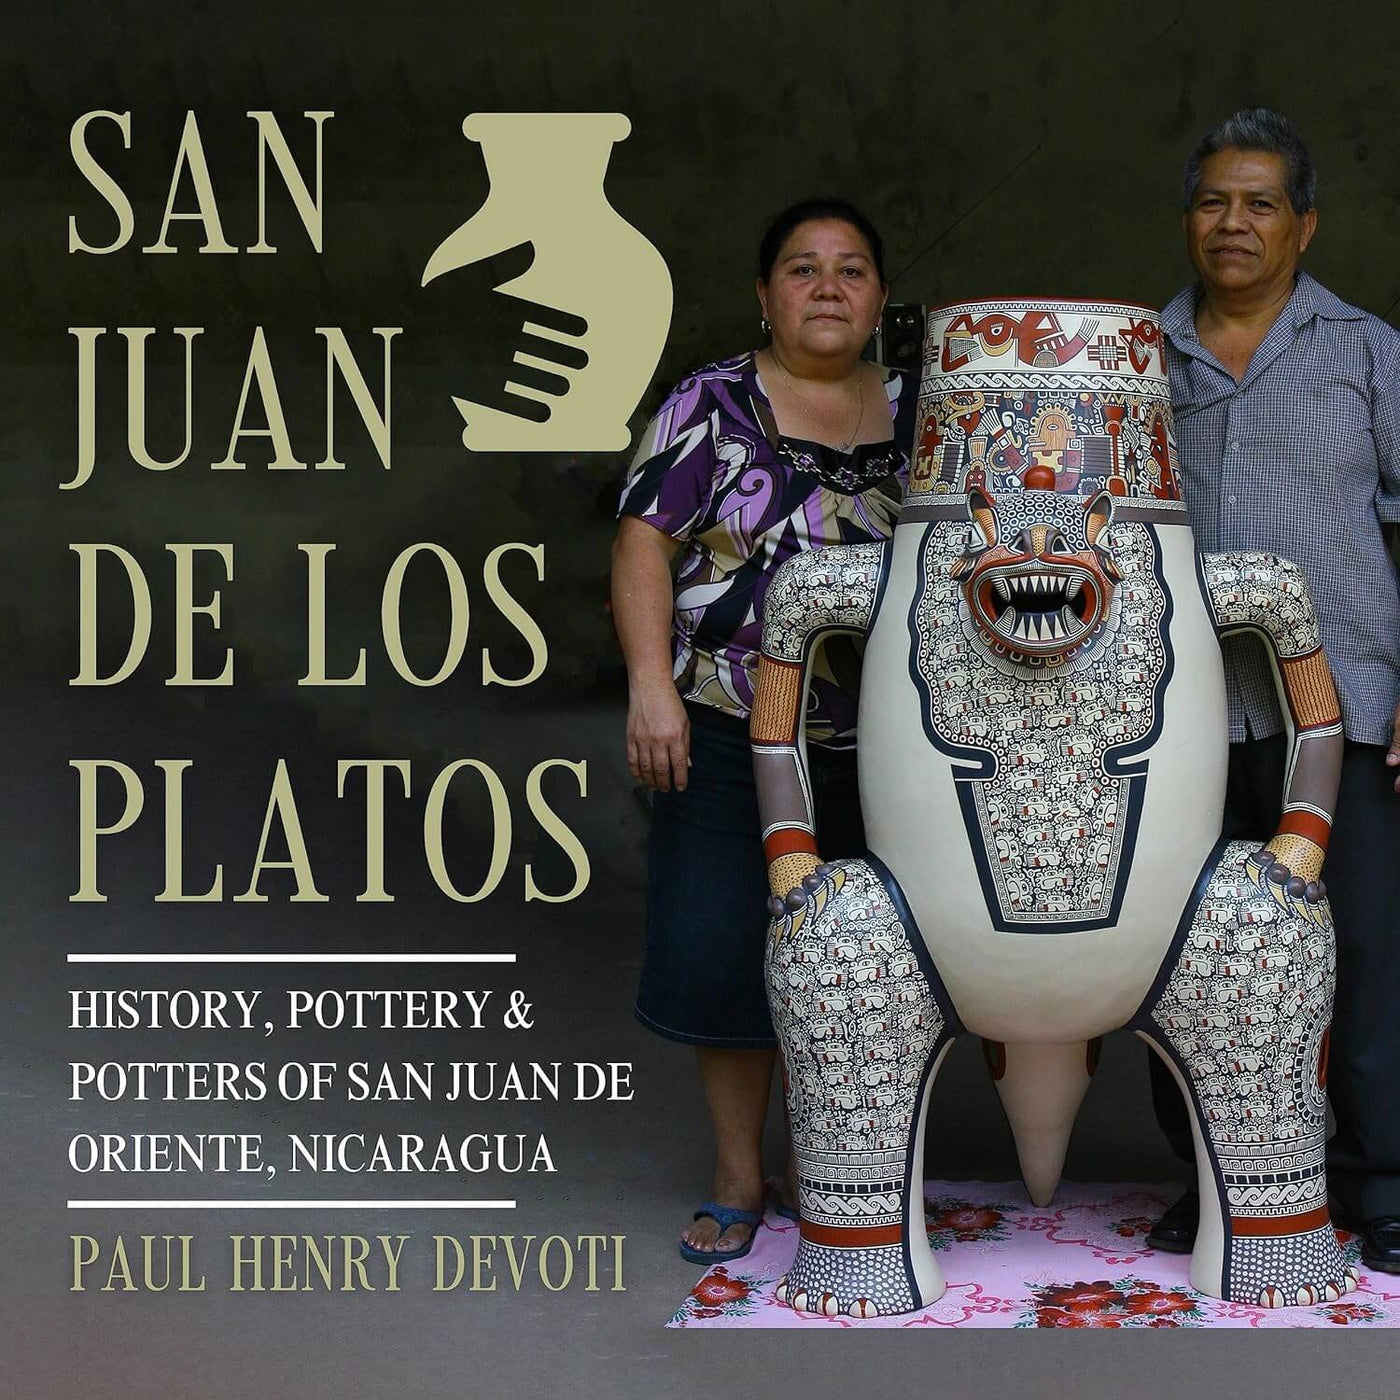 San Juan de los Platos: History, Pottery & Potters of San Juan de Oriente, Nicaragua